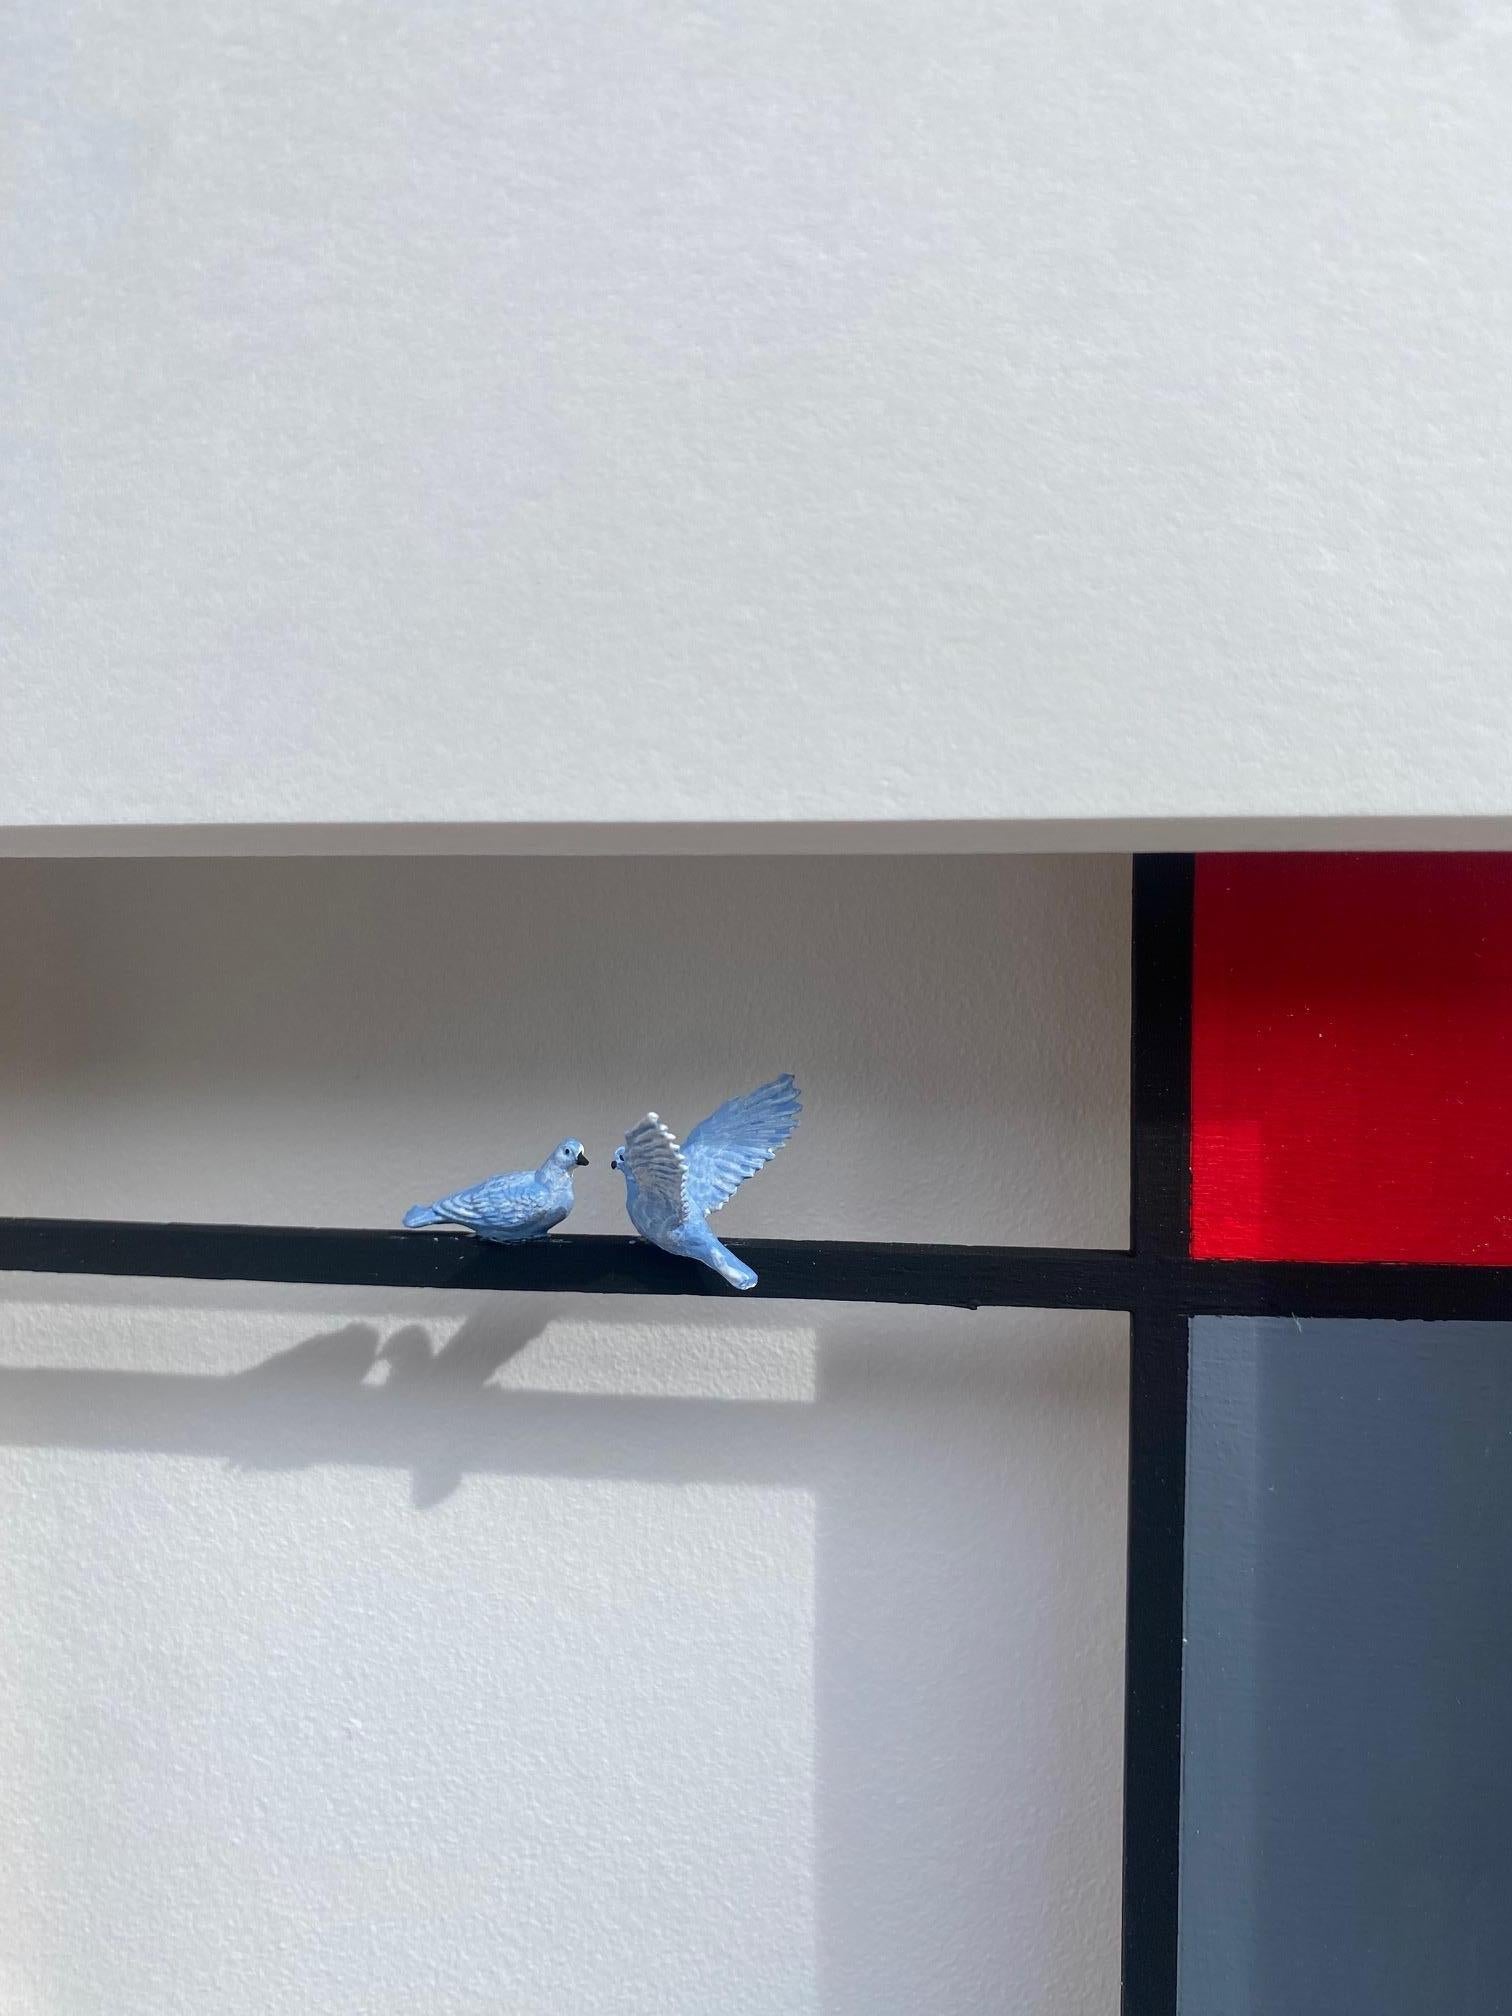 Homage to Mondrian - Perch - contemporary art work, design tribute Dutch master For Sale 1